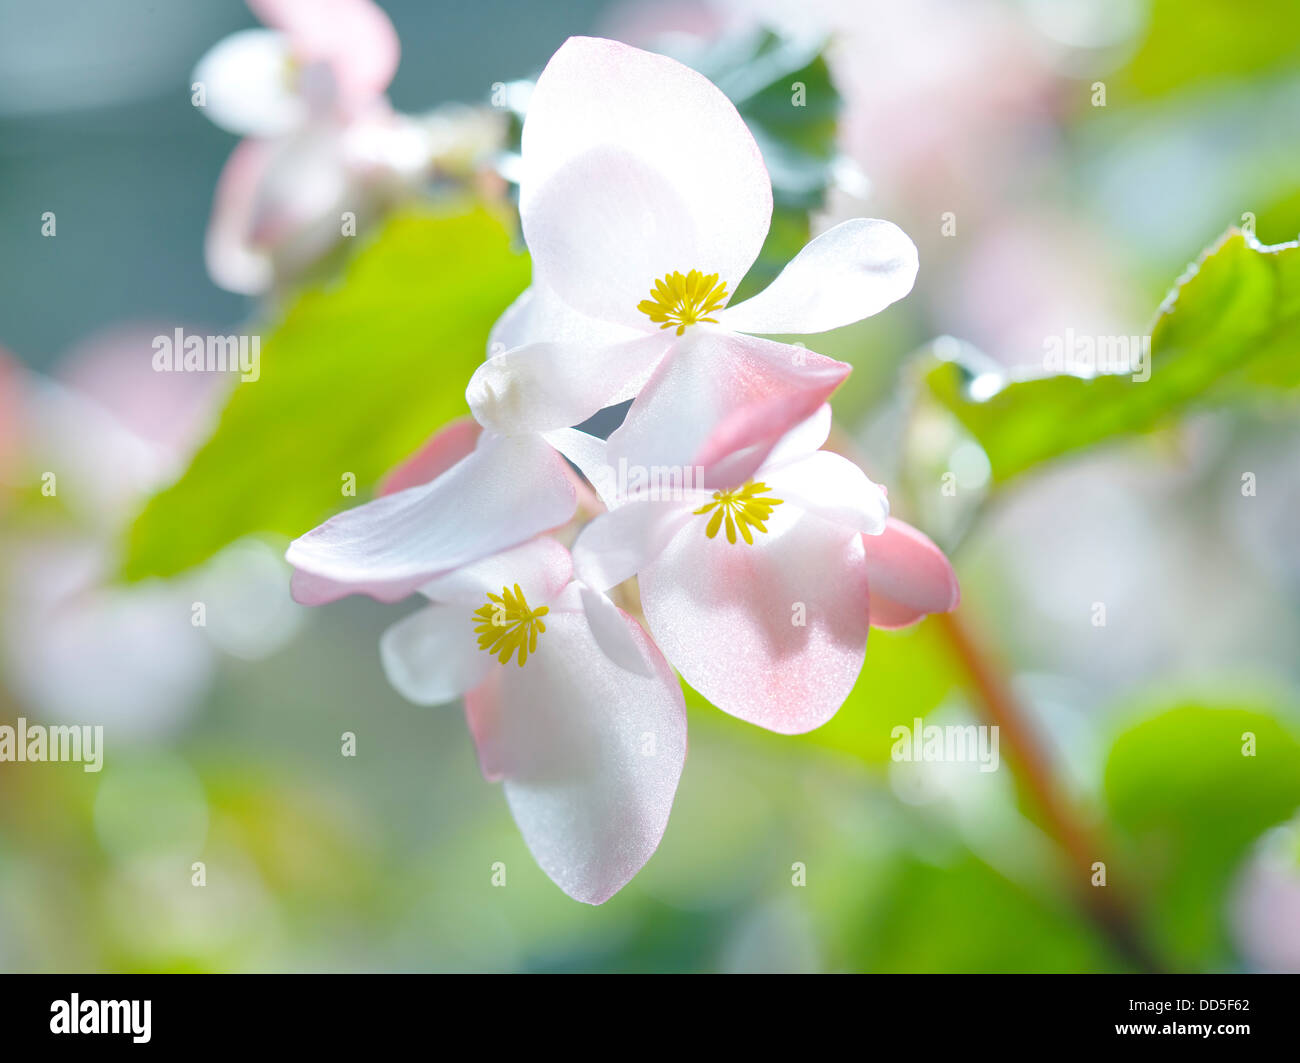 Begonia flowers Stock Photo